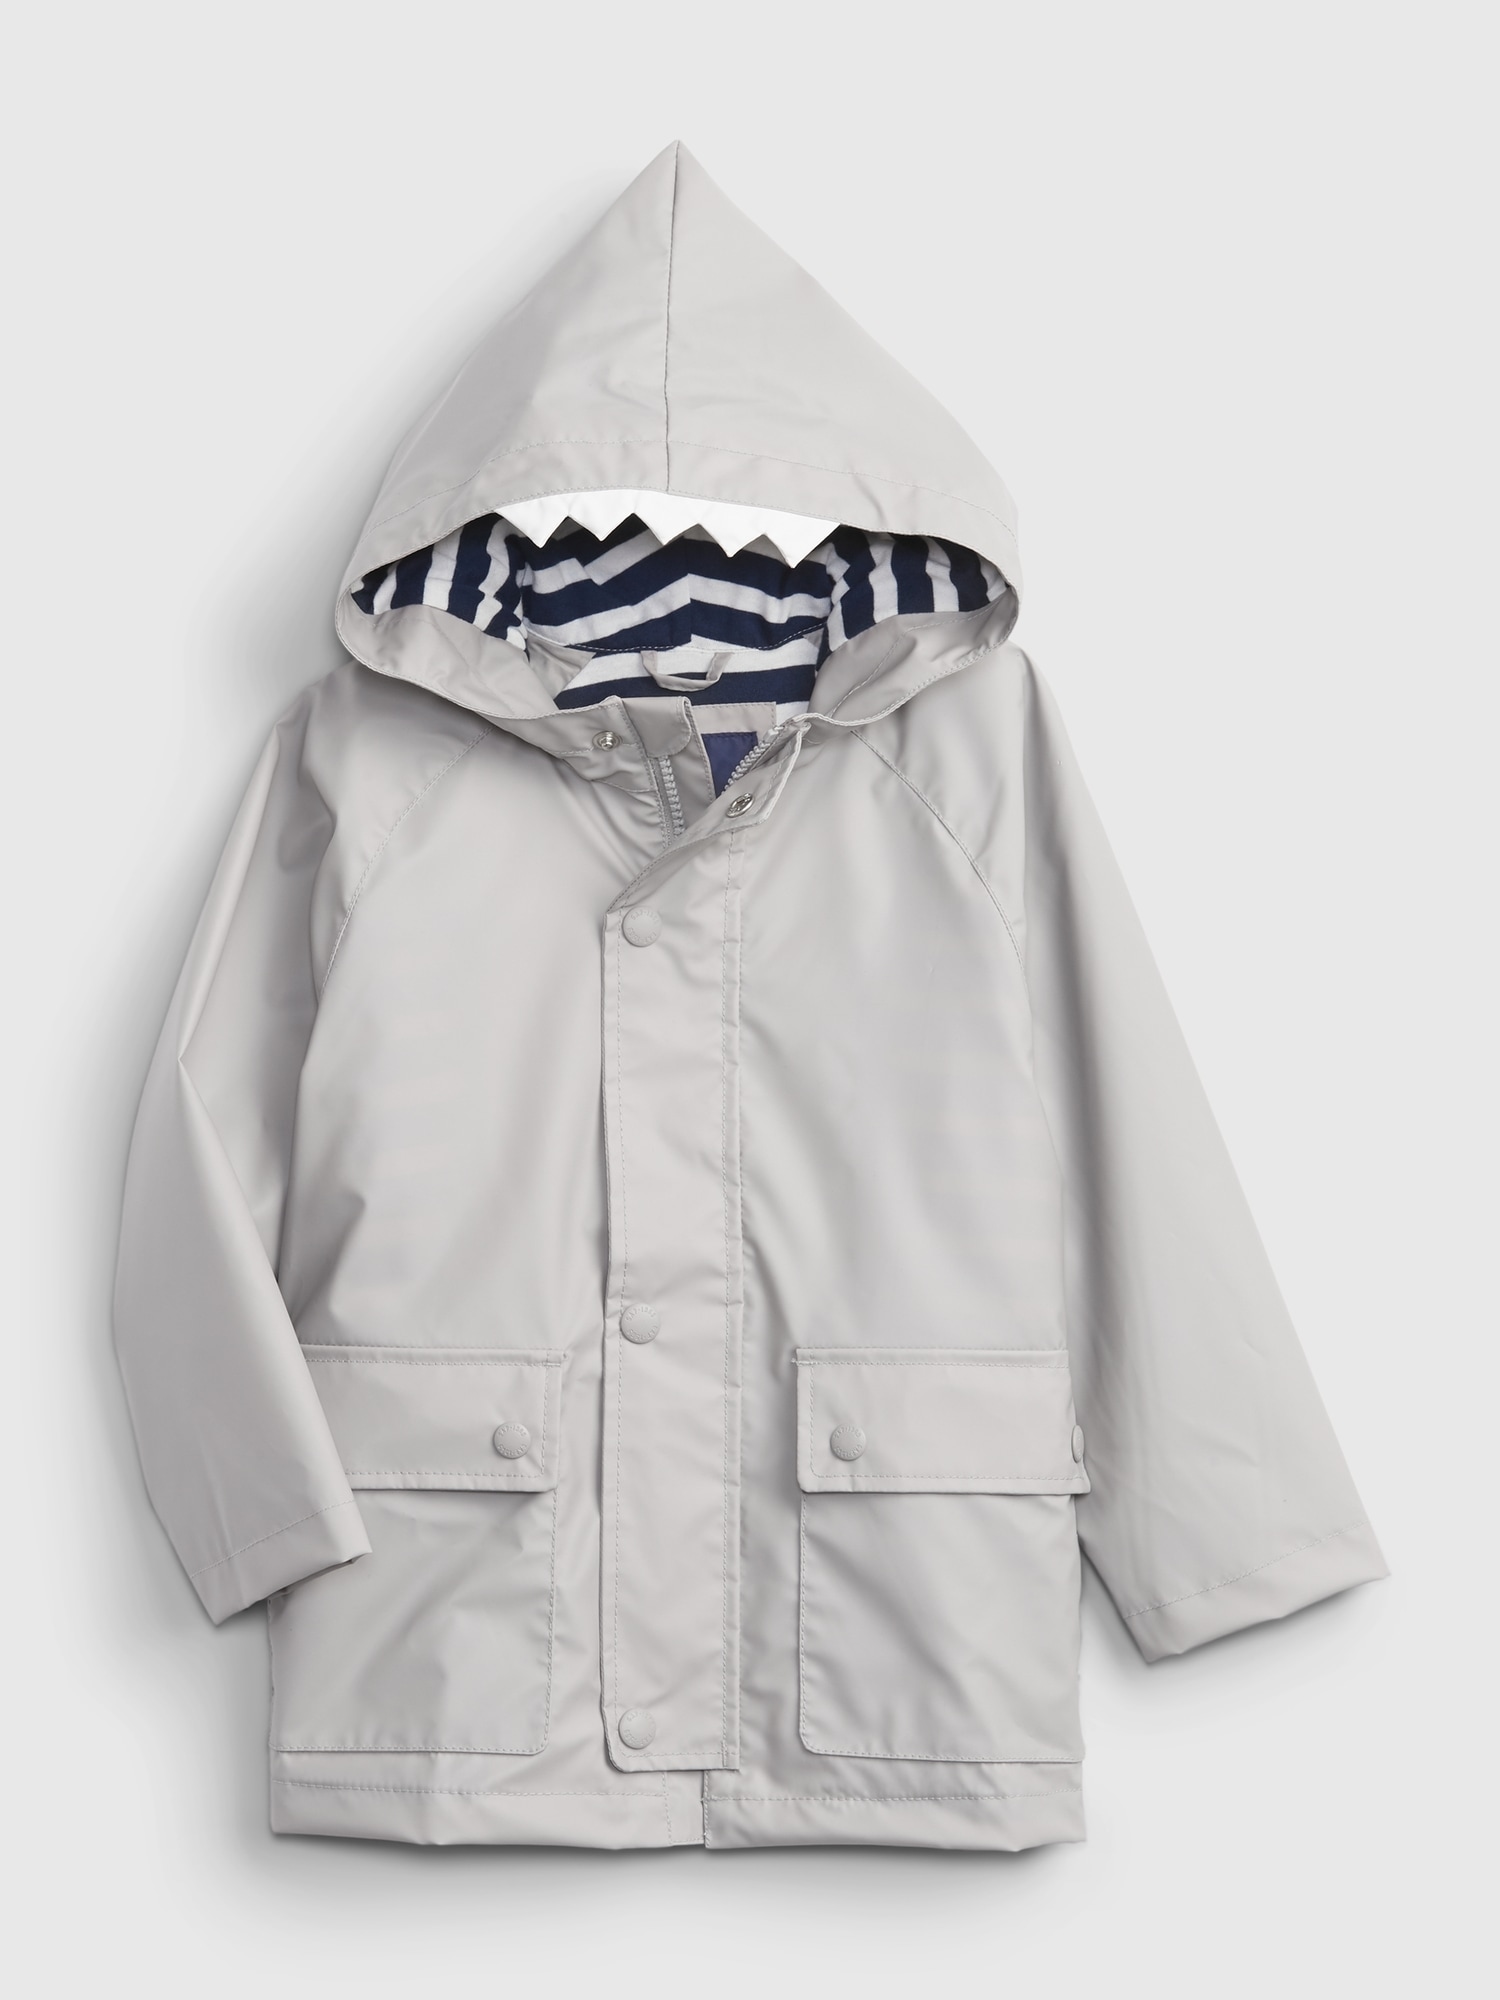 Toddler Shark Lined Raincoat | Gap